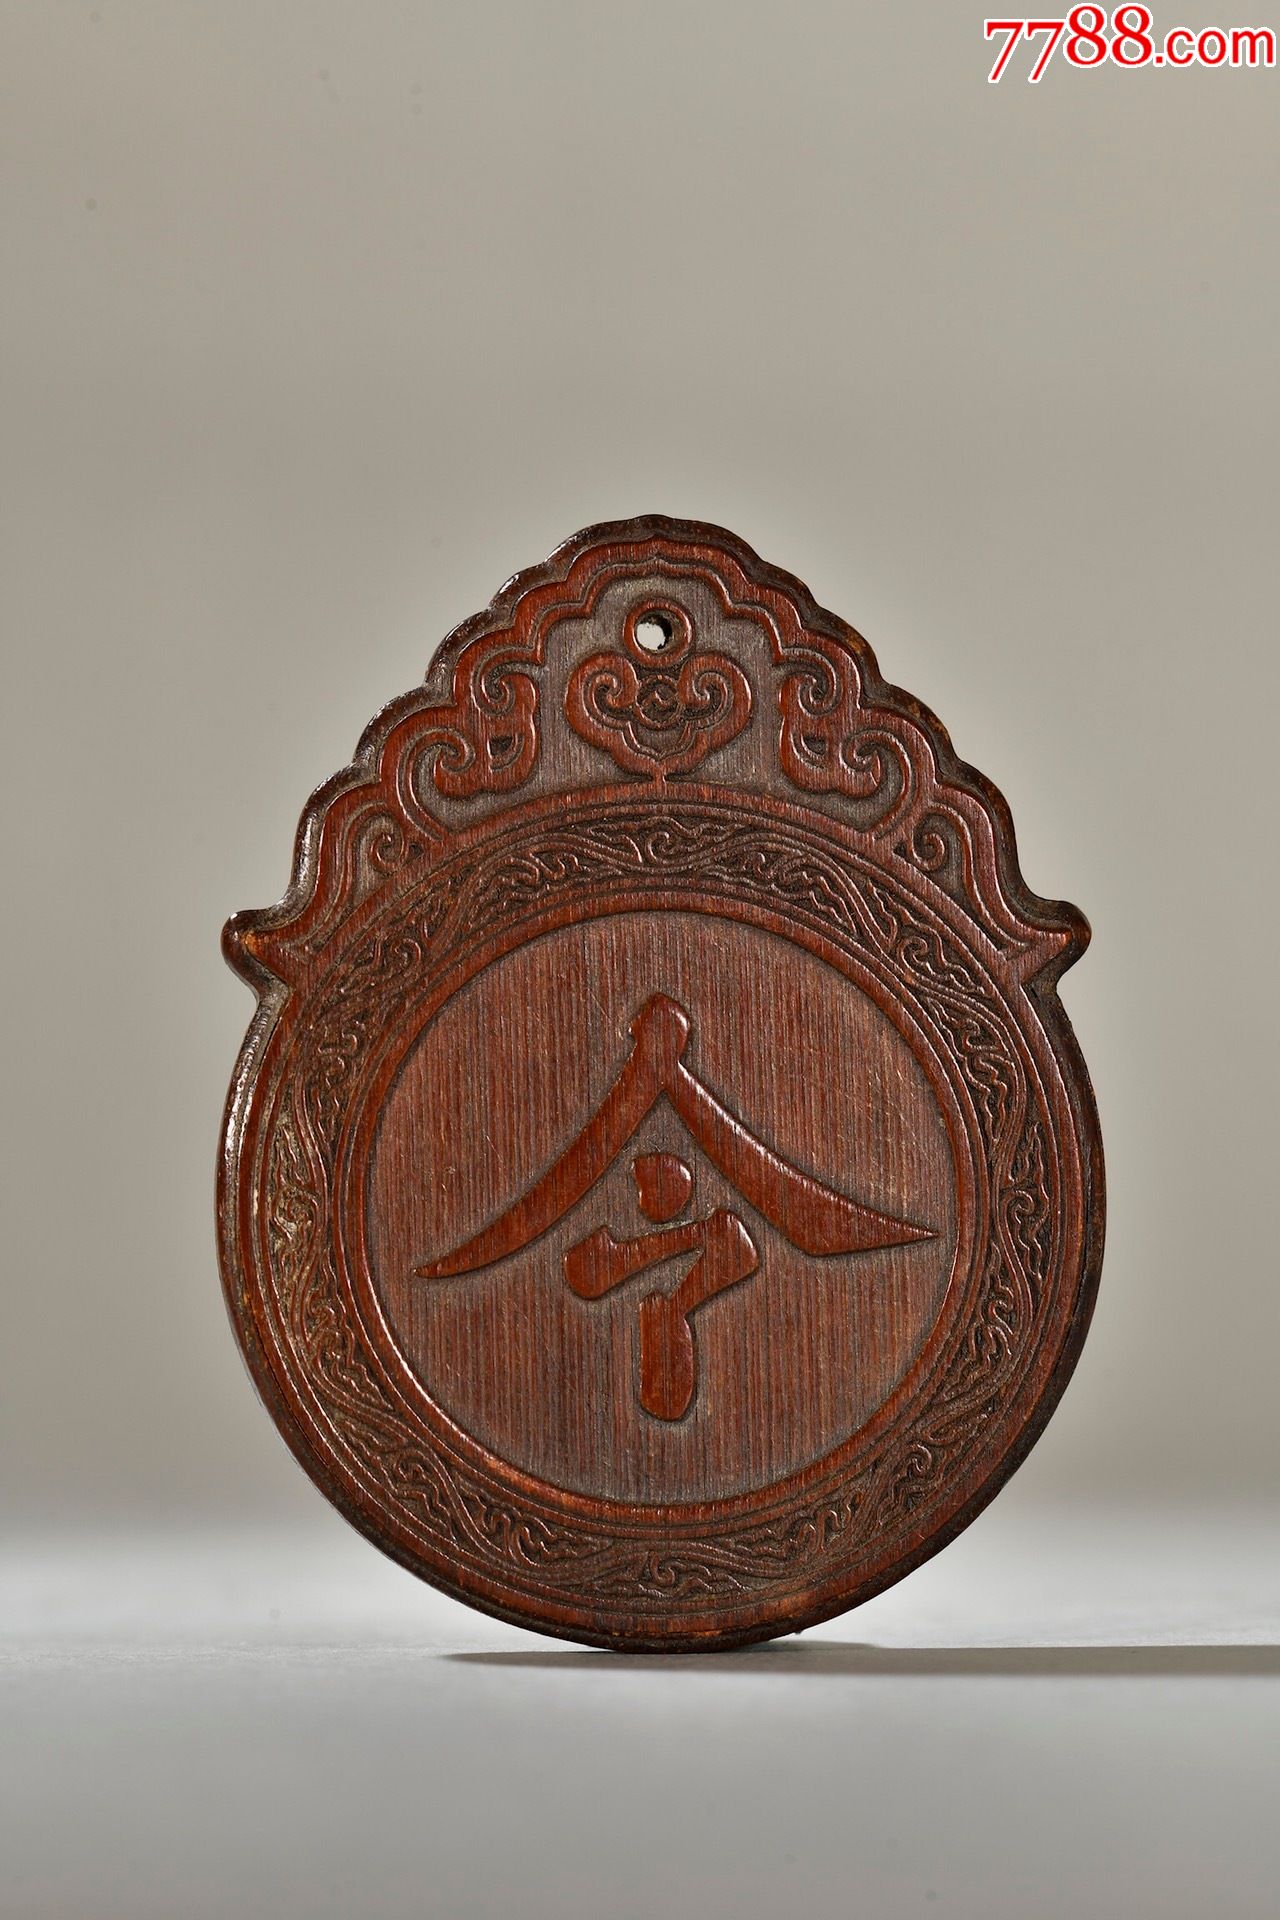 8cm藏品取老竹子为材,雕刻令牌,古代通行之证,满工精雕,字体清晰,雕刻